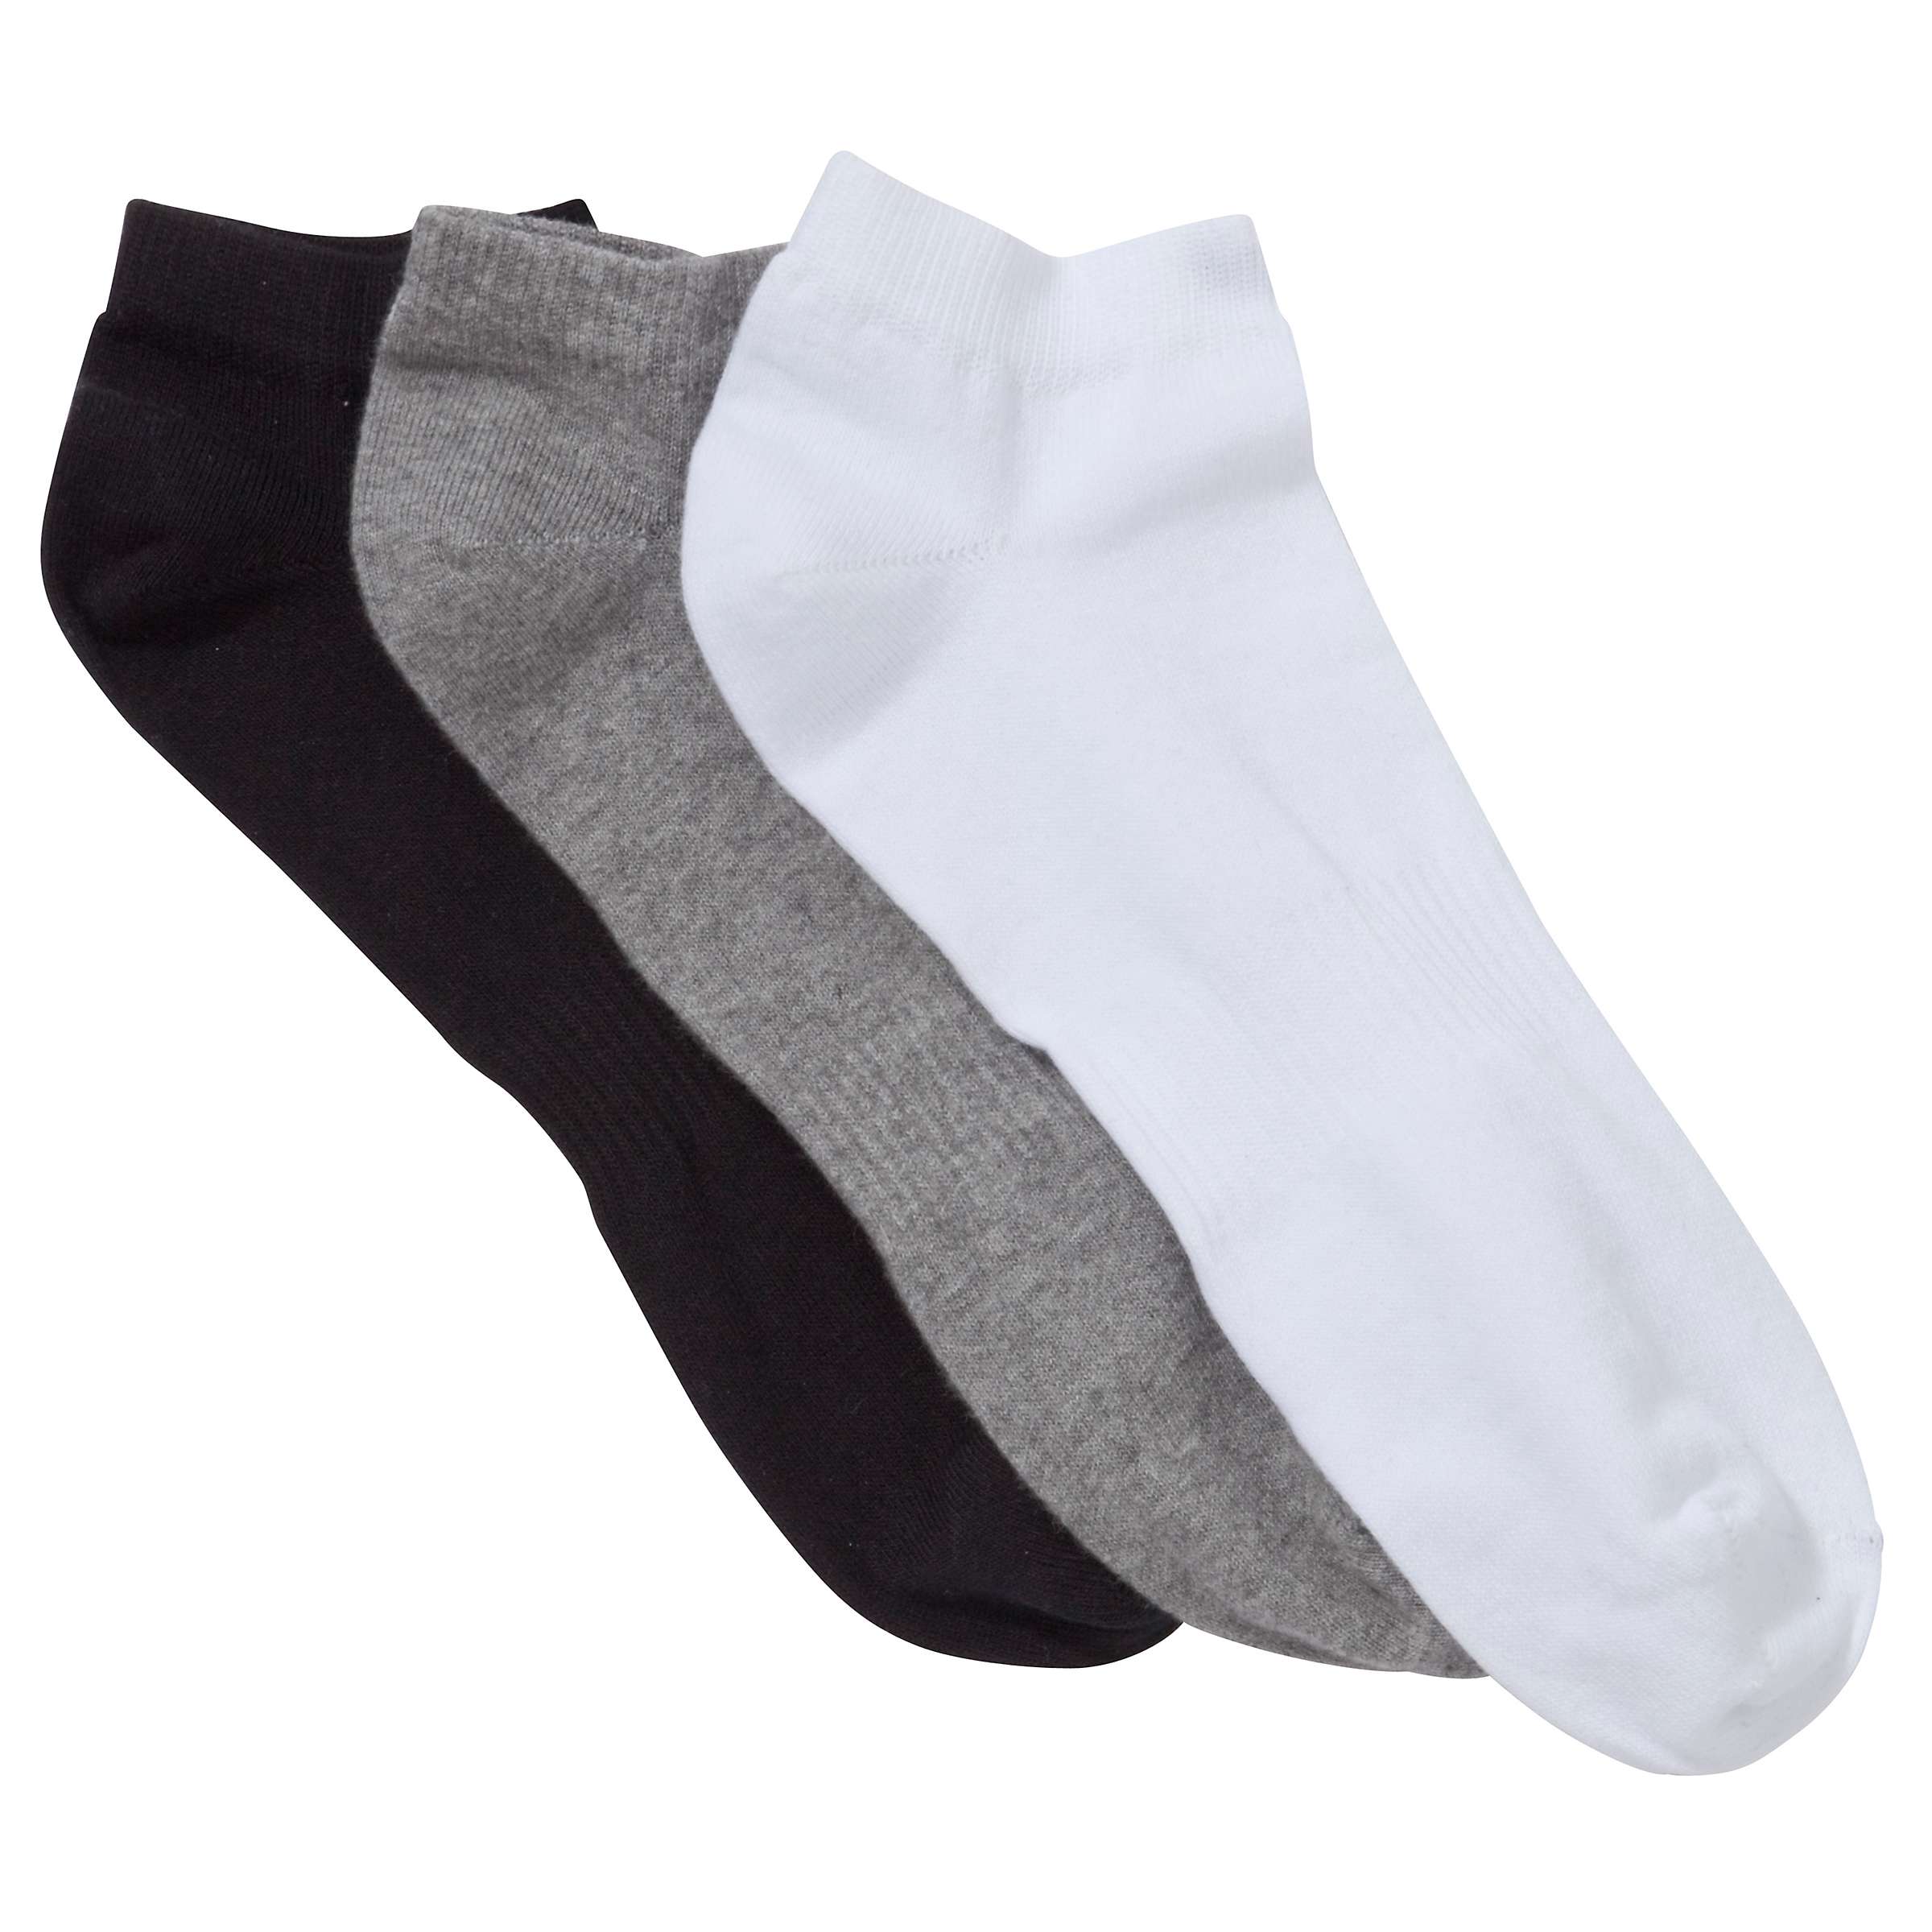 John Lewis Liner Socks, Pack of 3, Black/Grey/White at John Lewis ...